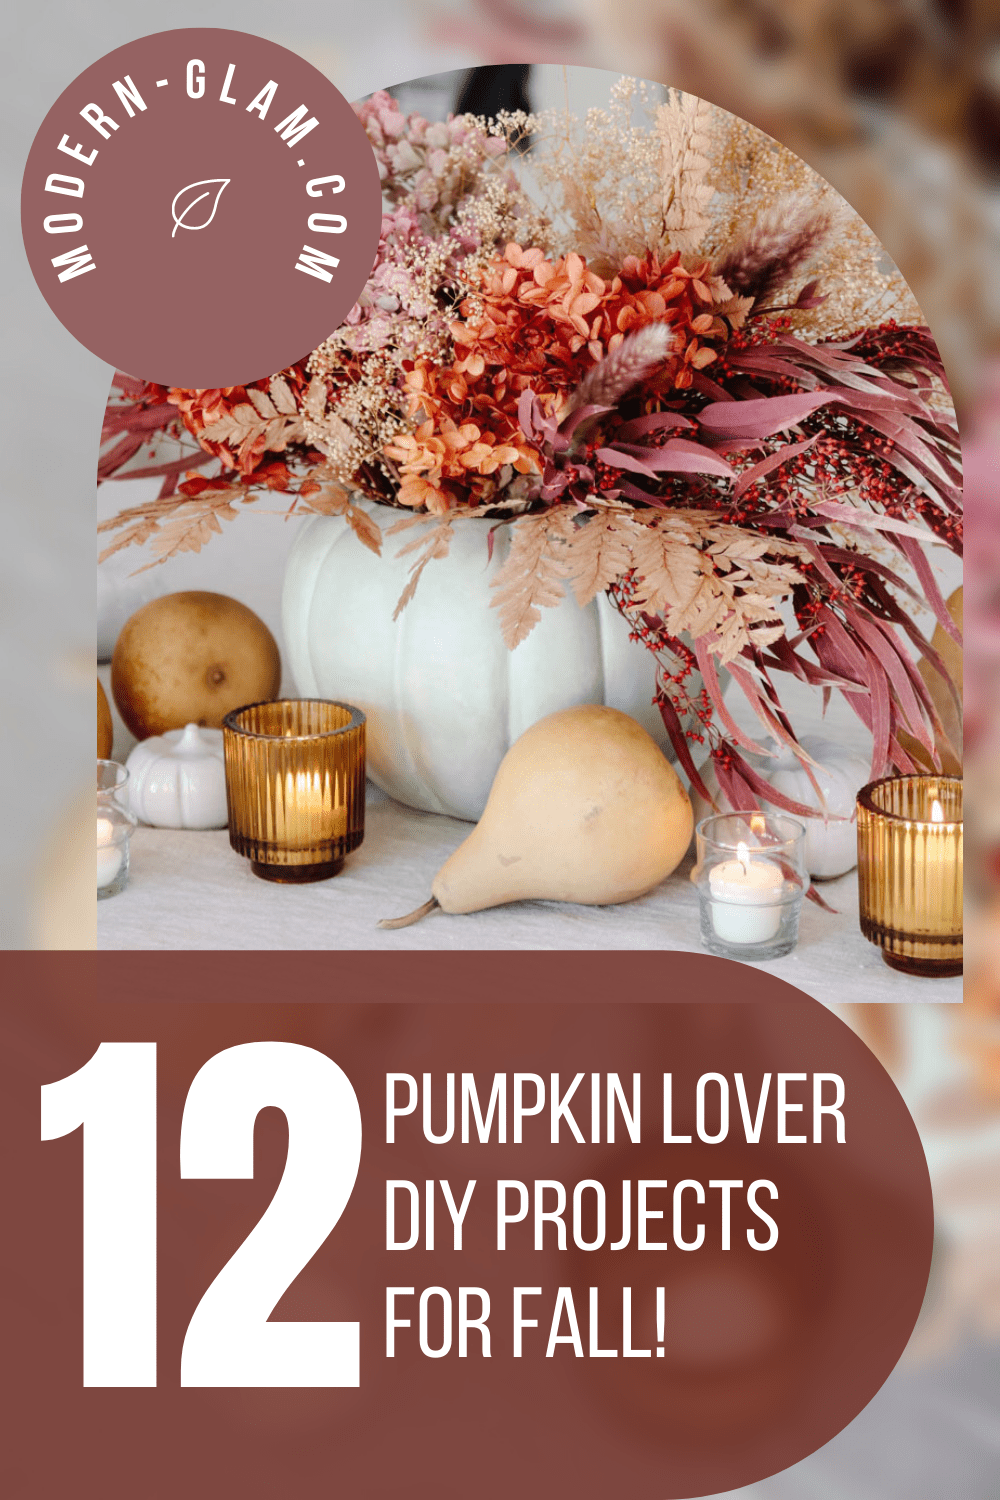 12 pumpkin diy ideas via @modernglamhome